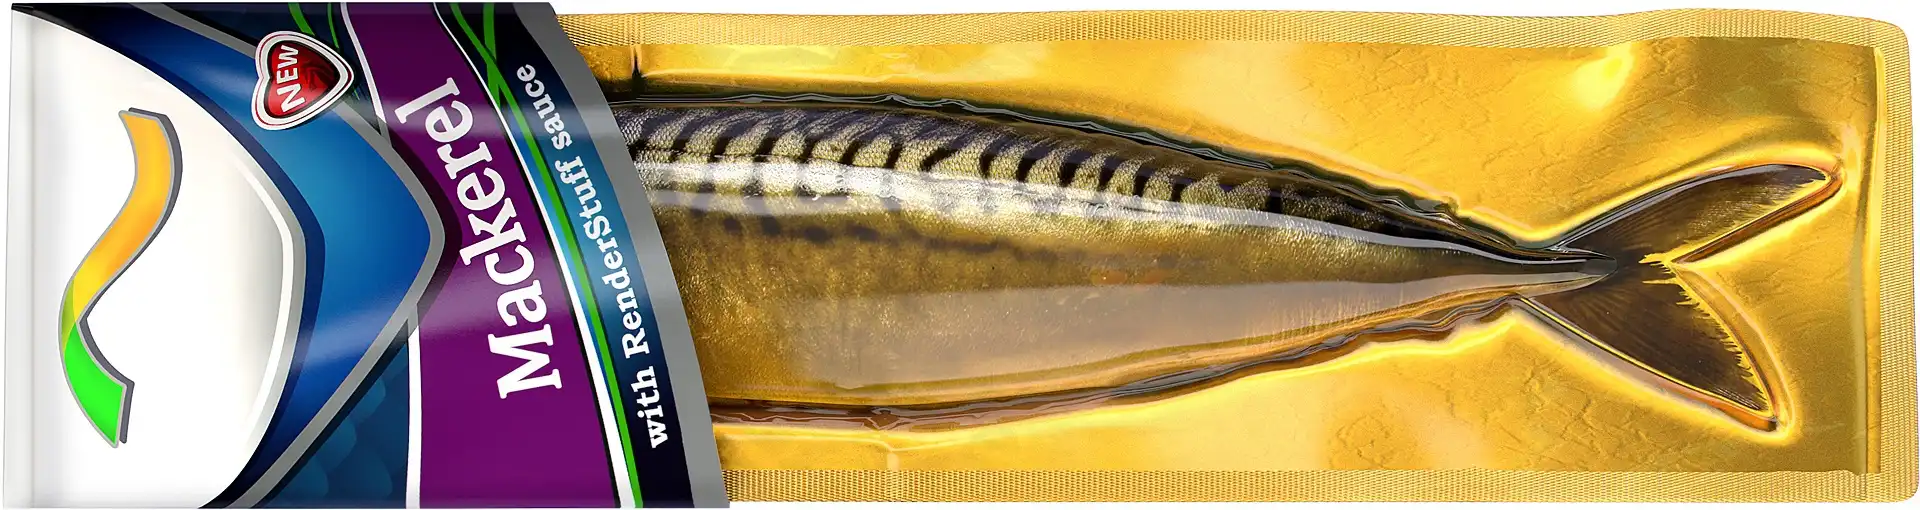 Ultraphotorealistic 3d-rendering of smoked mackerel fish in plastic packaging.